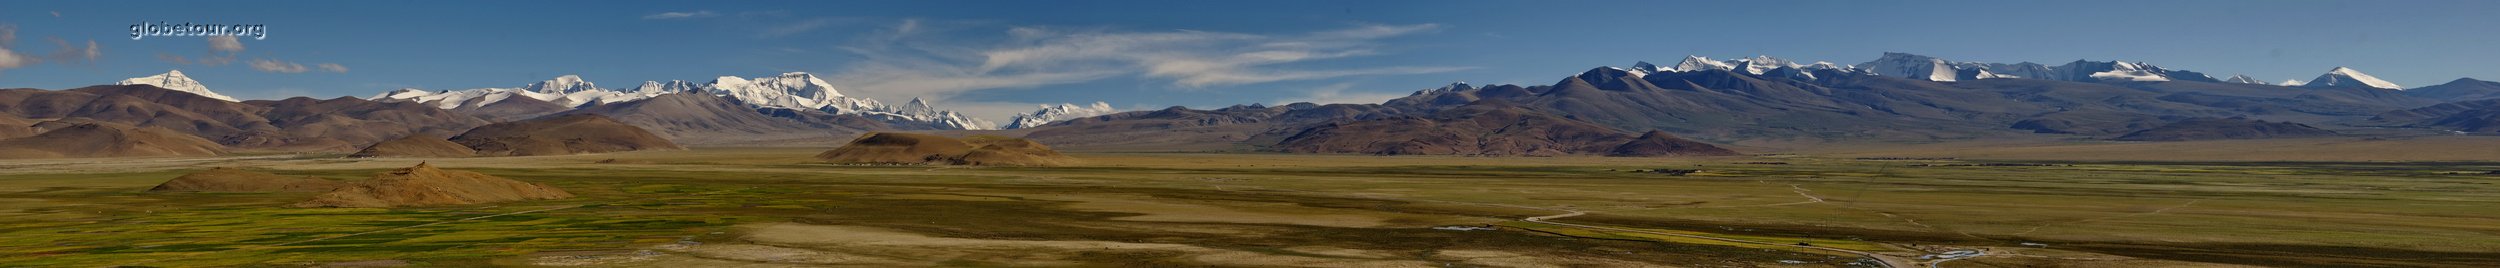 Tibet, Tingri, himalaya view (everest on left)